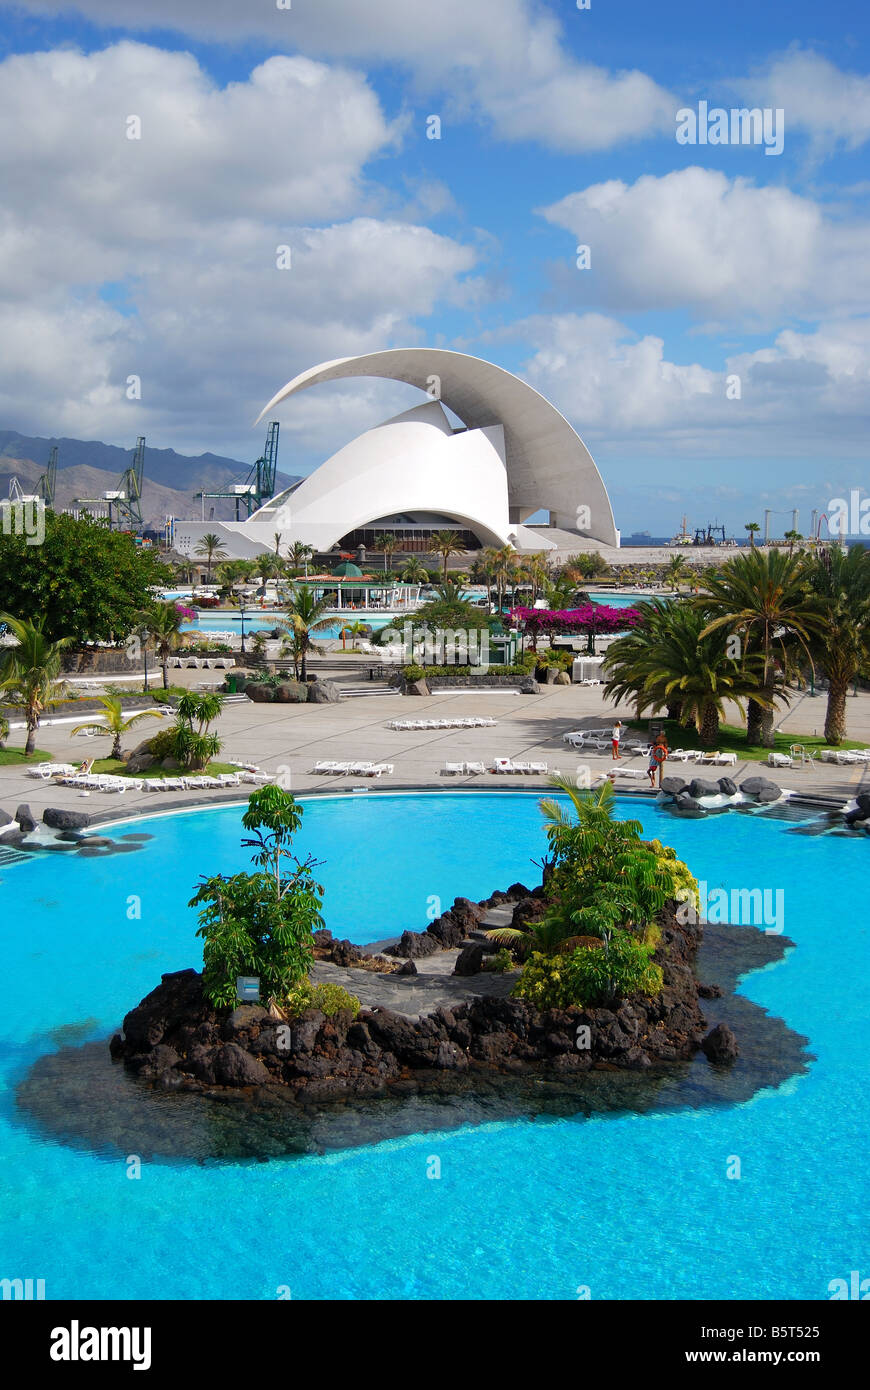 Parque Maritimo Lido und Auditoria de Tenerife, Avenida de la Constitucion, Santa Cruz de Tenerife, Teneriffa, Kanarische Inseln, Spanien Stockfoto